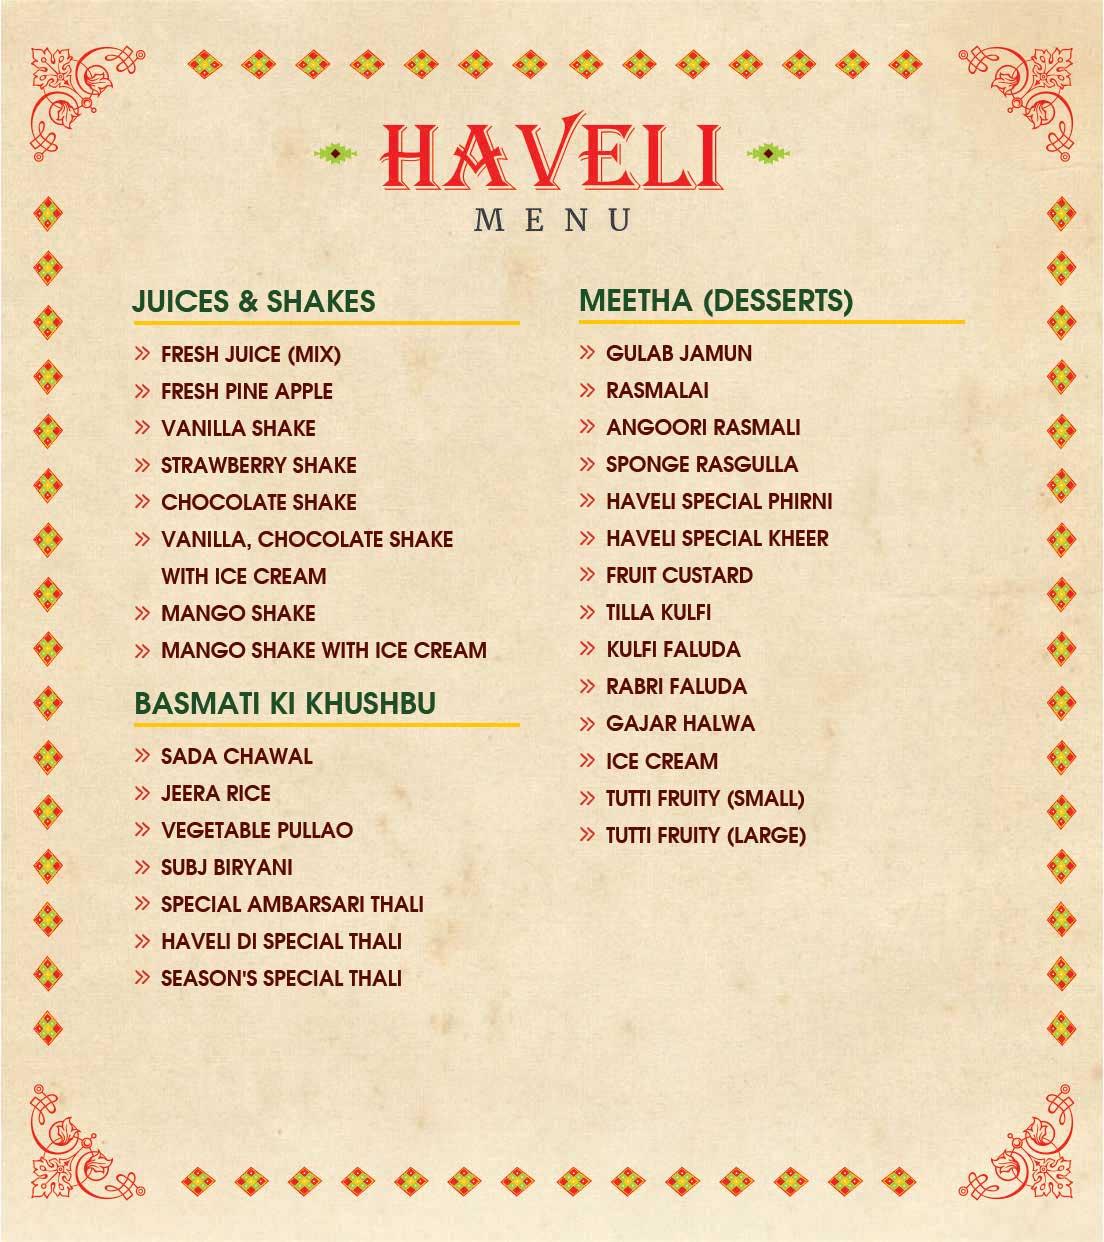 Murthal Haveli Restaurant menu